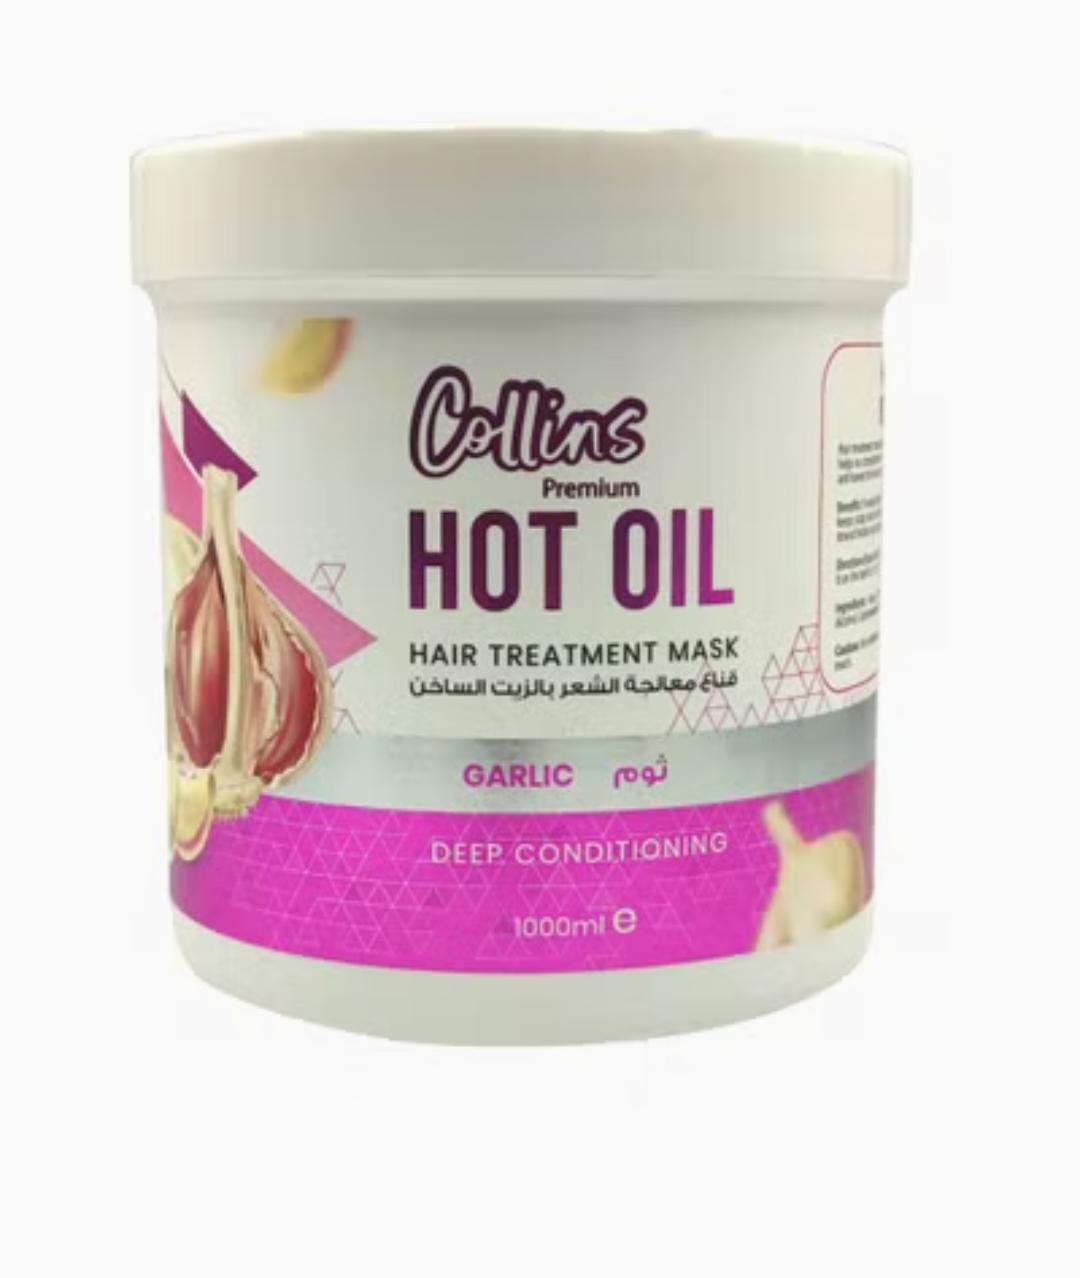 Collins Premium - Hot Oil 1000ml - Garlic